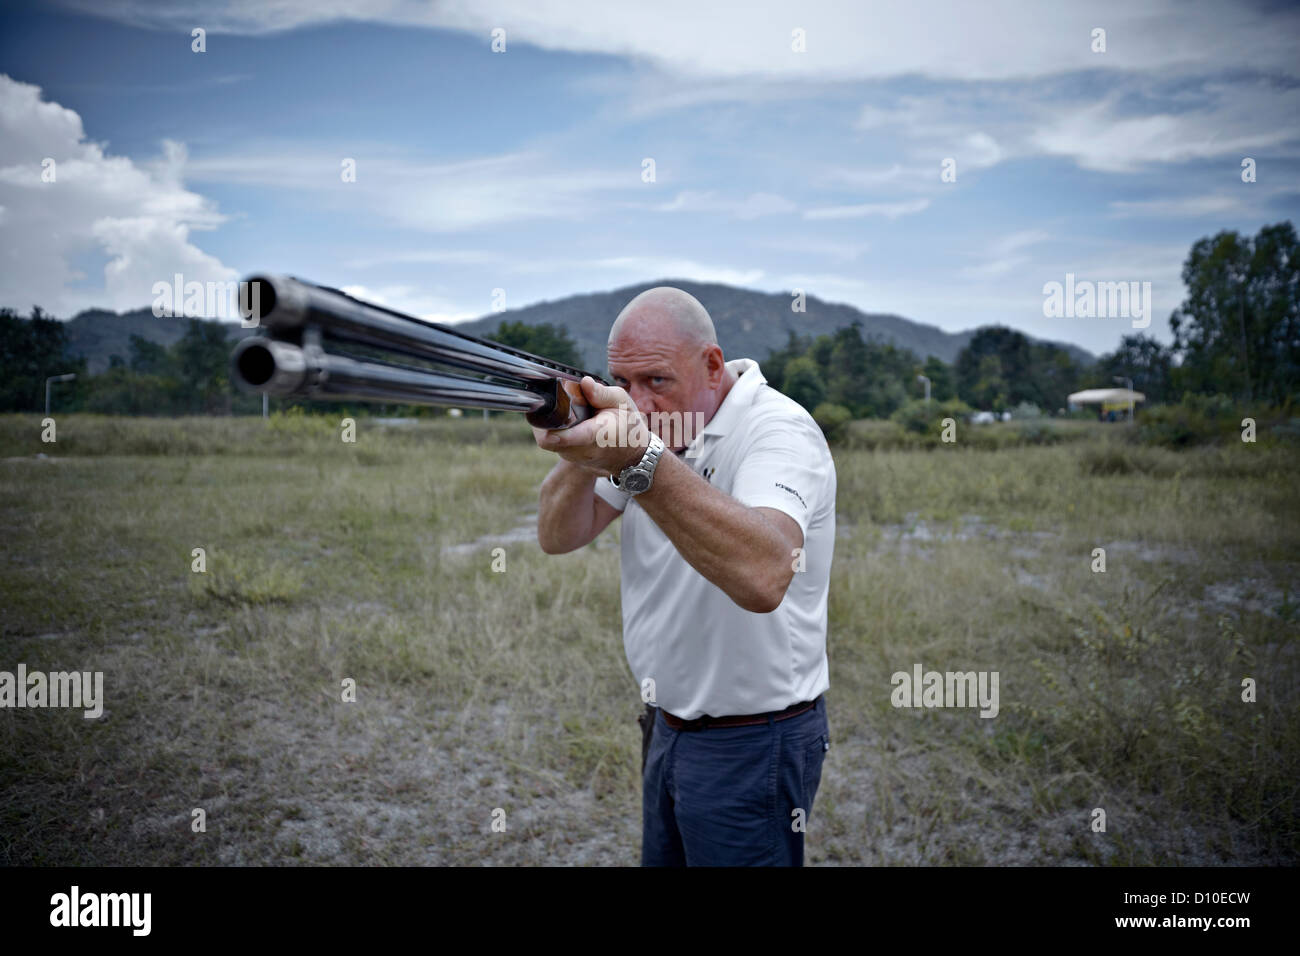 Man taking aim with shotgun Stock Photo